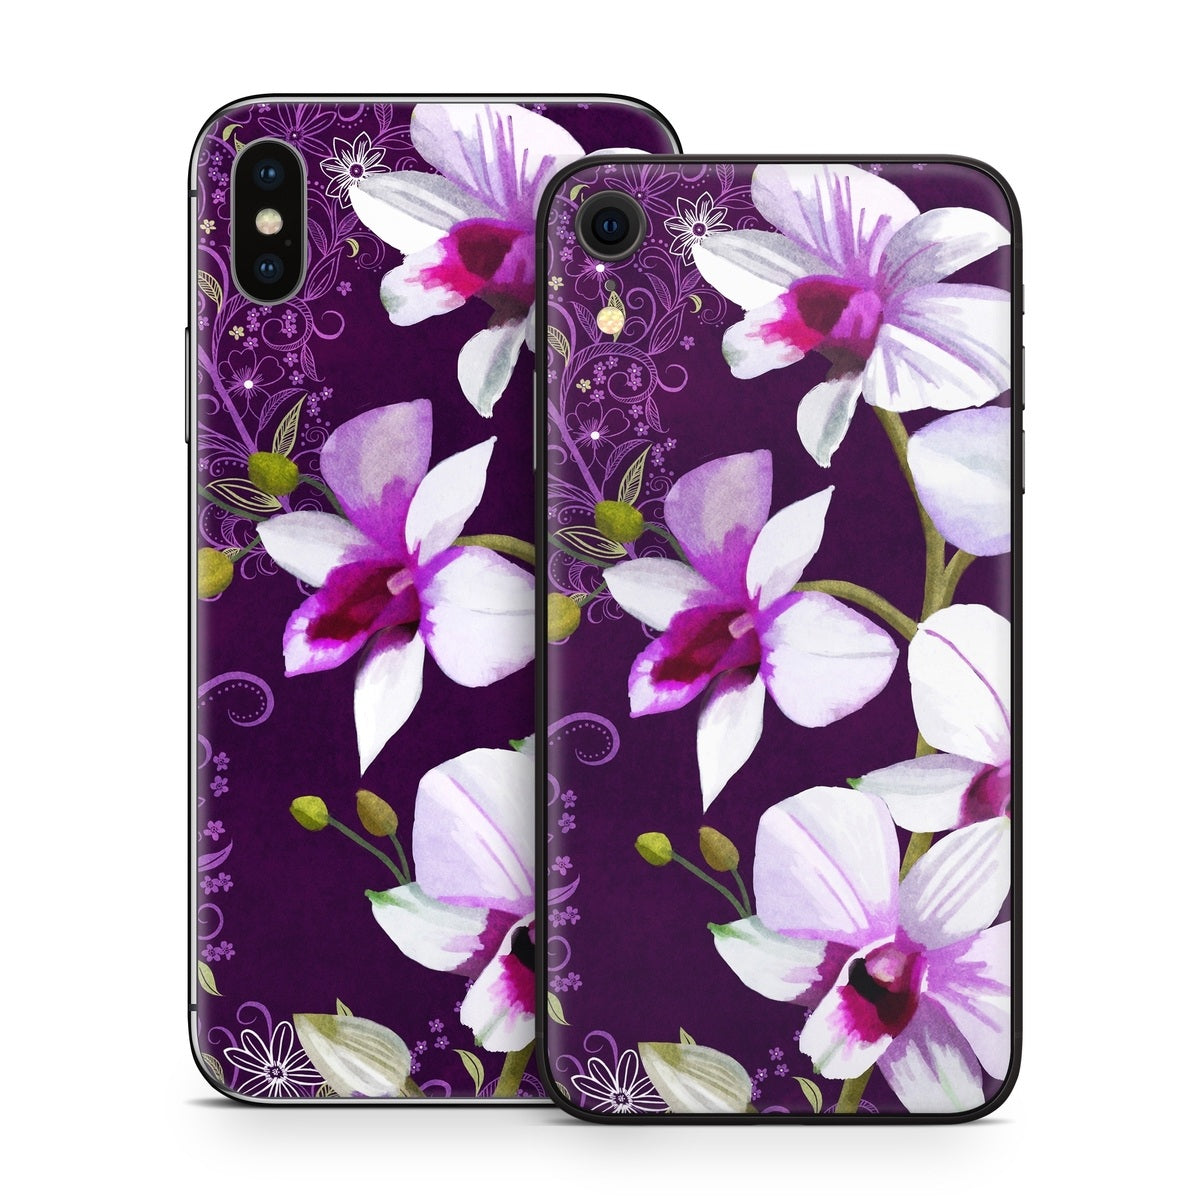 Violet Worlds - Apple iPhone X Skin